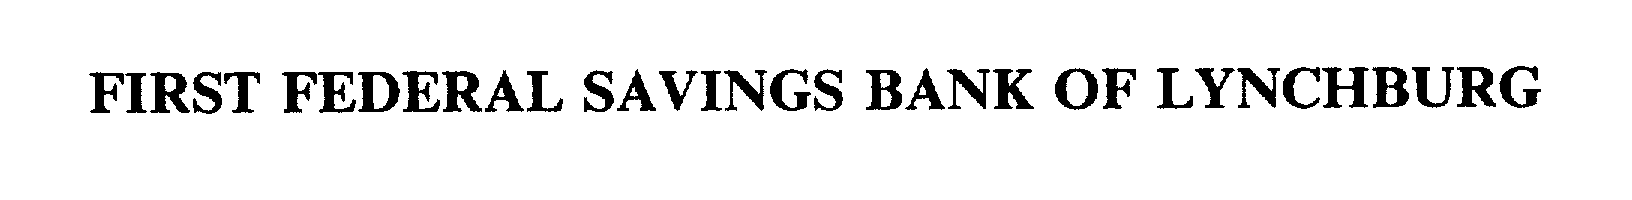  FIRST FEDERAL SAVINGS BANK OF LYNCHBURG